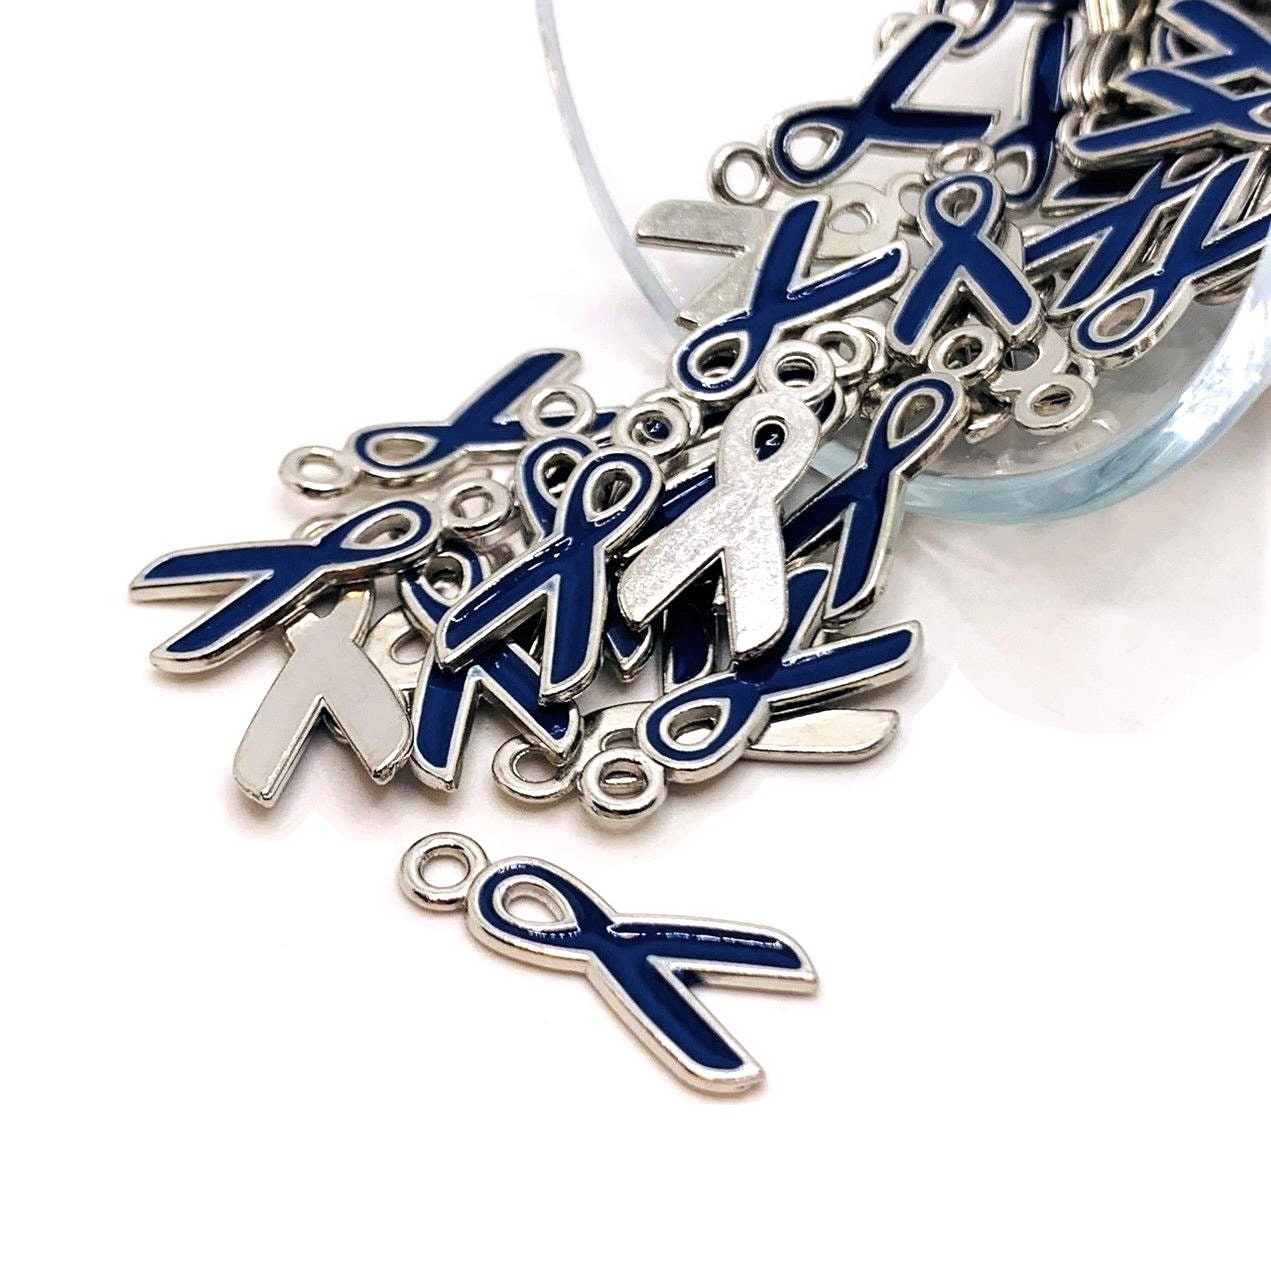 Inexpensive Dark Blue Ribbon Lapel Pins for Child Abuse, Colon Cancer,  Huntinton Disease Awareness, Gift, Fundraising Bulk Quantities 